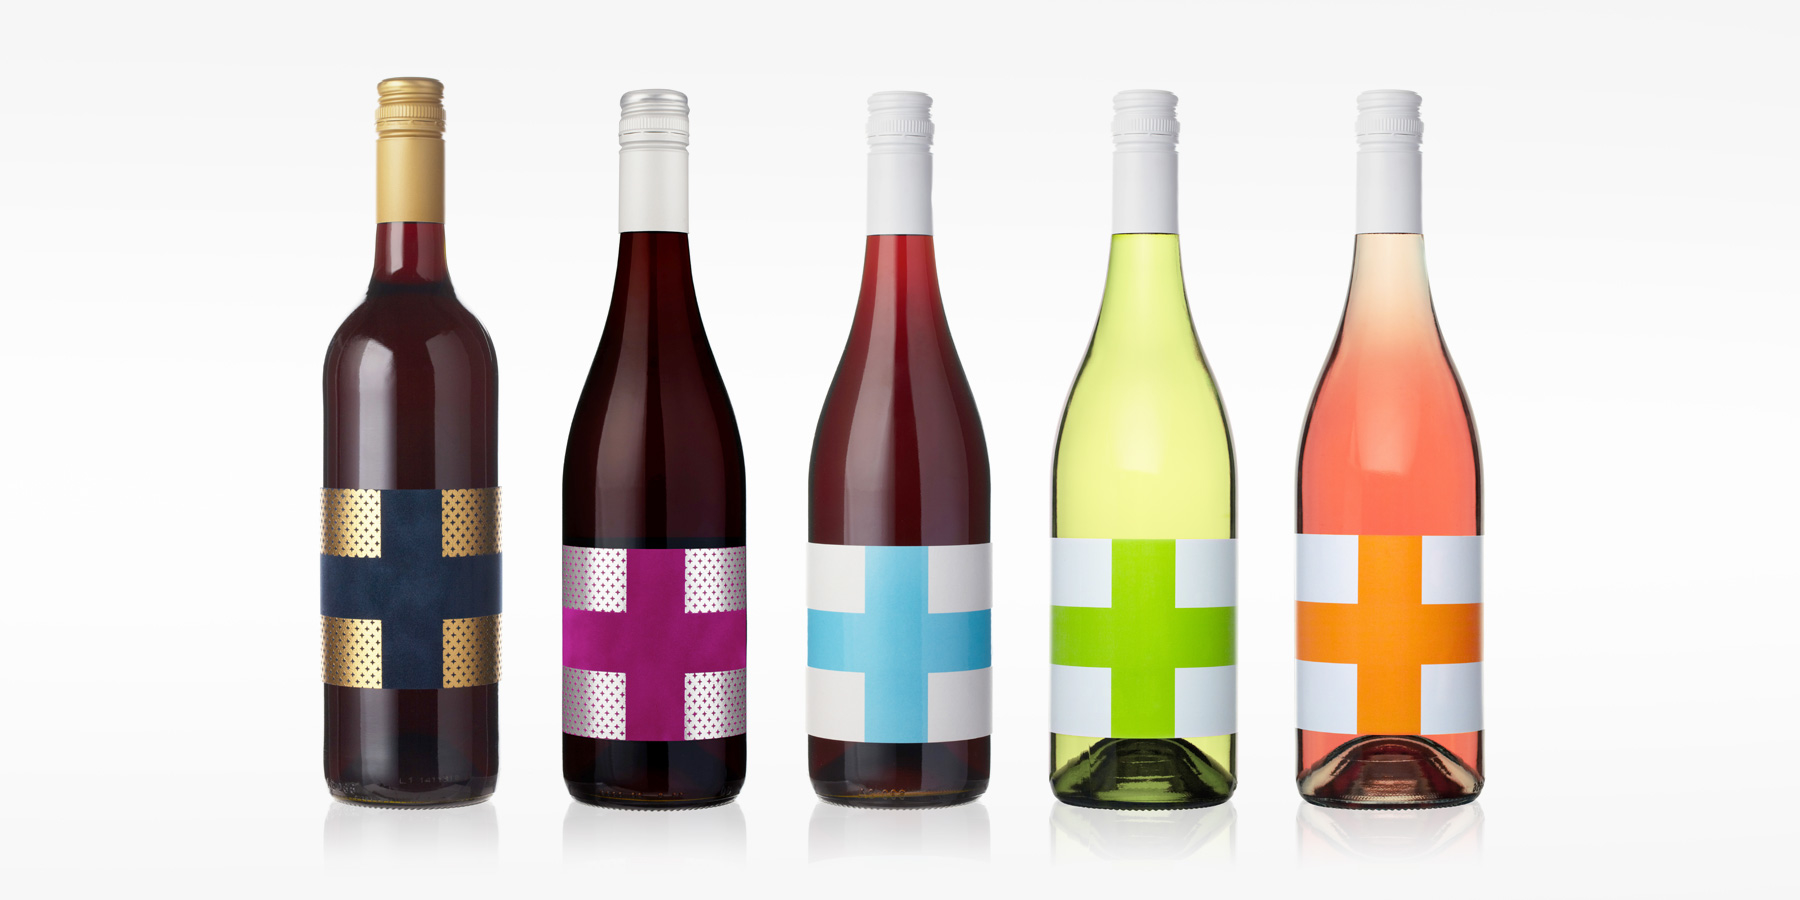 SOS Full Wine Packaging Range